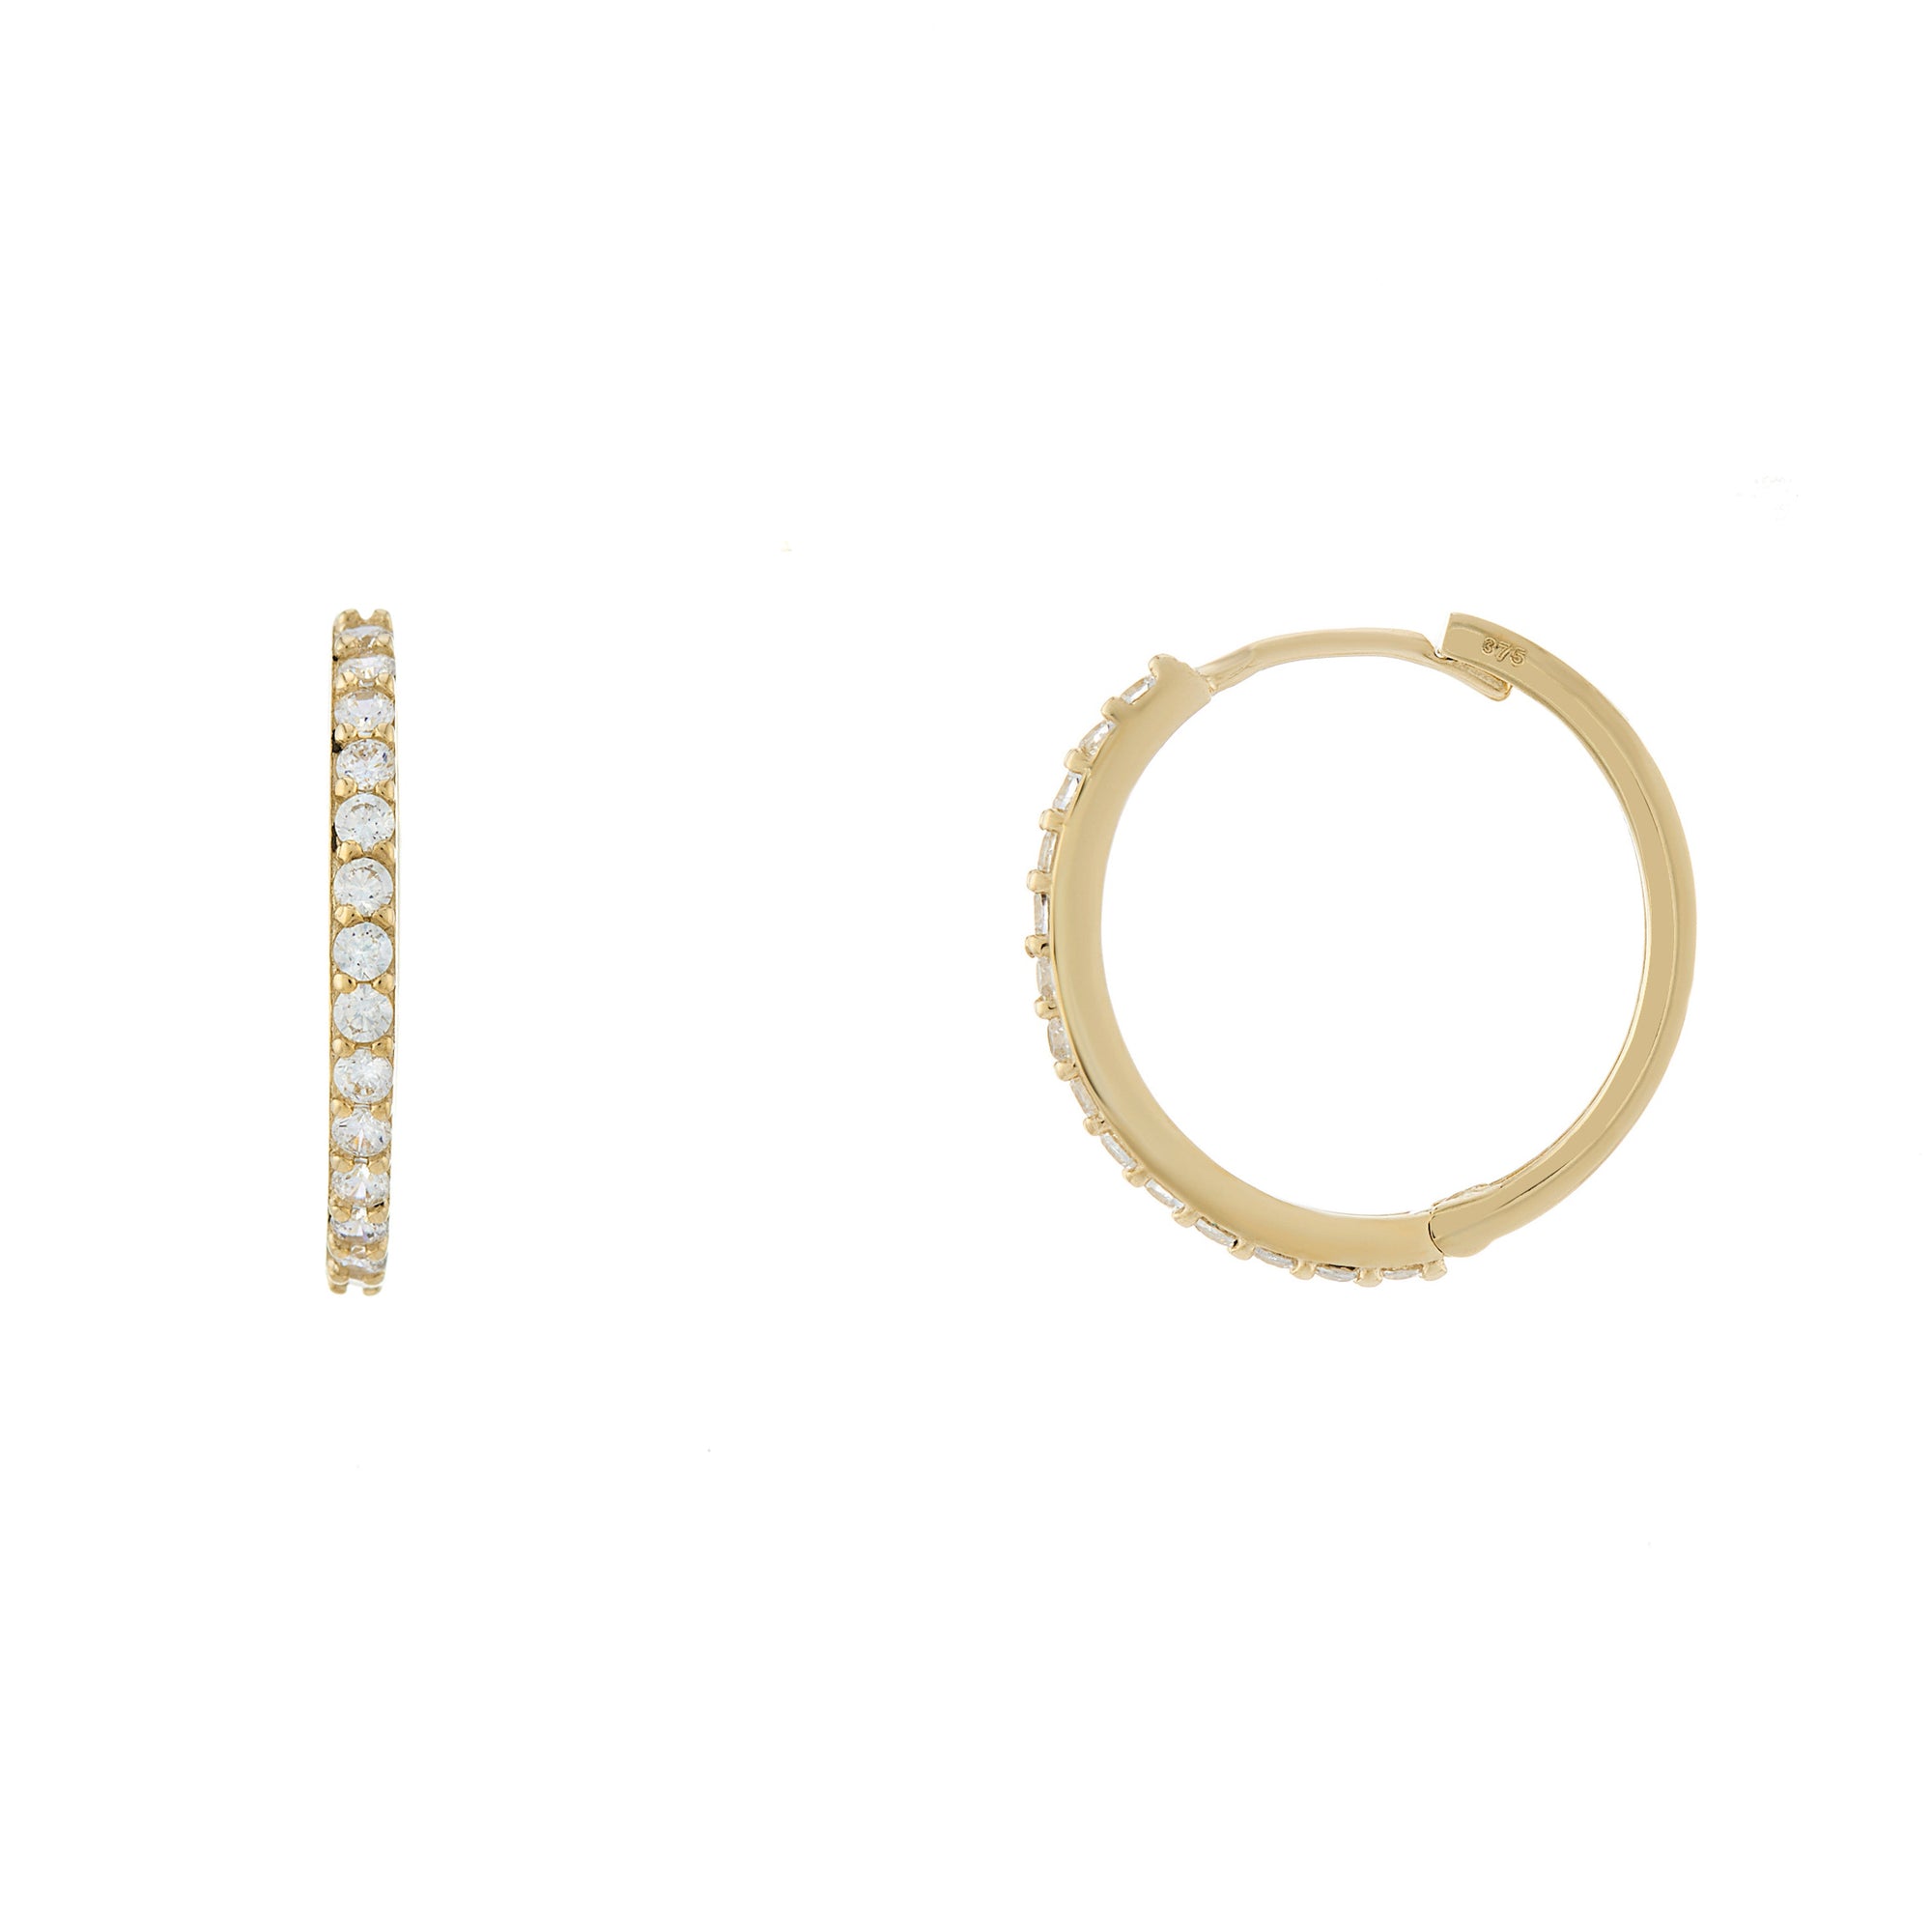 9ct gold 1.80mm x 15.00mm gold cz hoop earrings